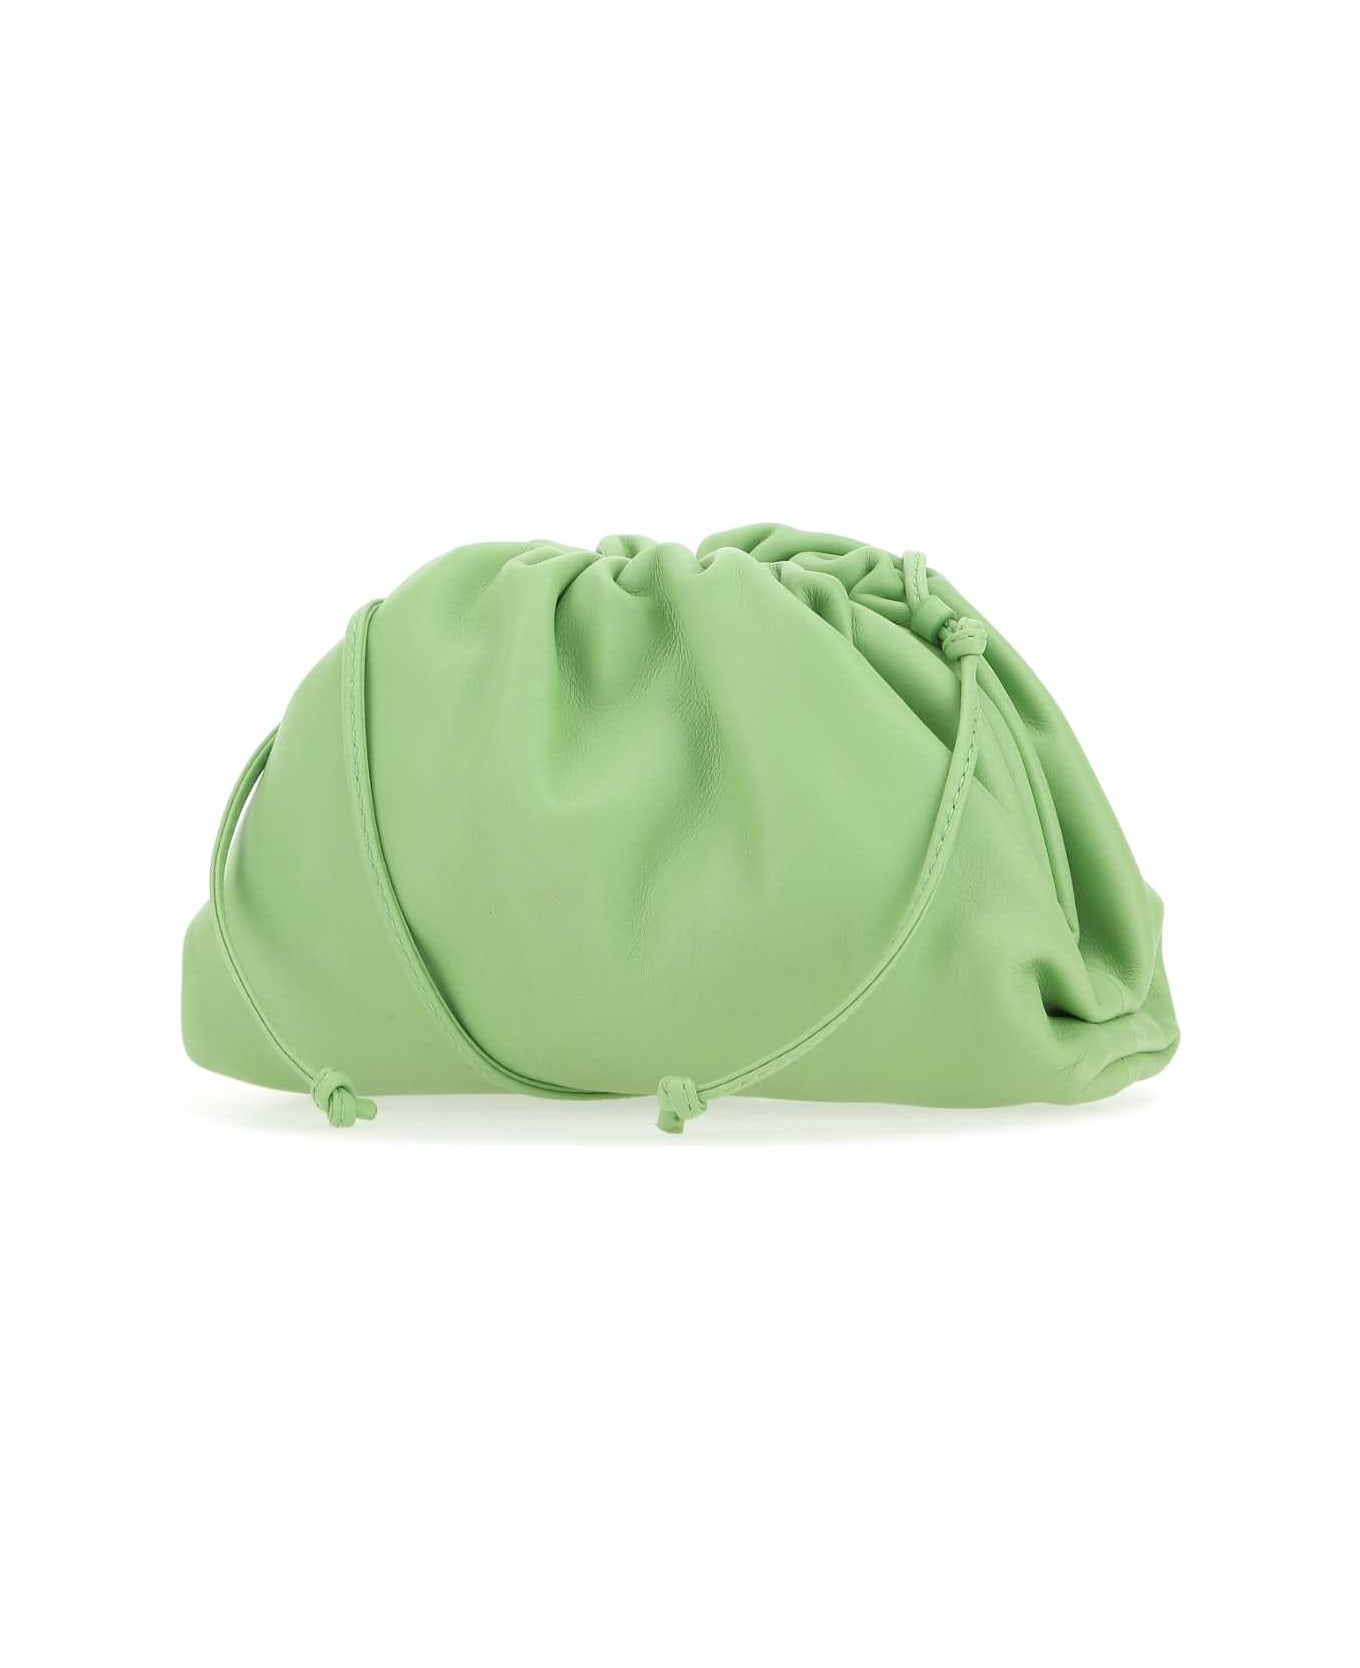 Bottega Veneta Pastel Green Nappa Leather Mini Pouch Clutch - 3840